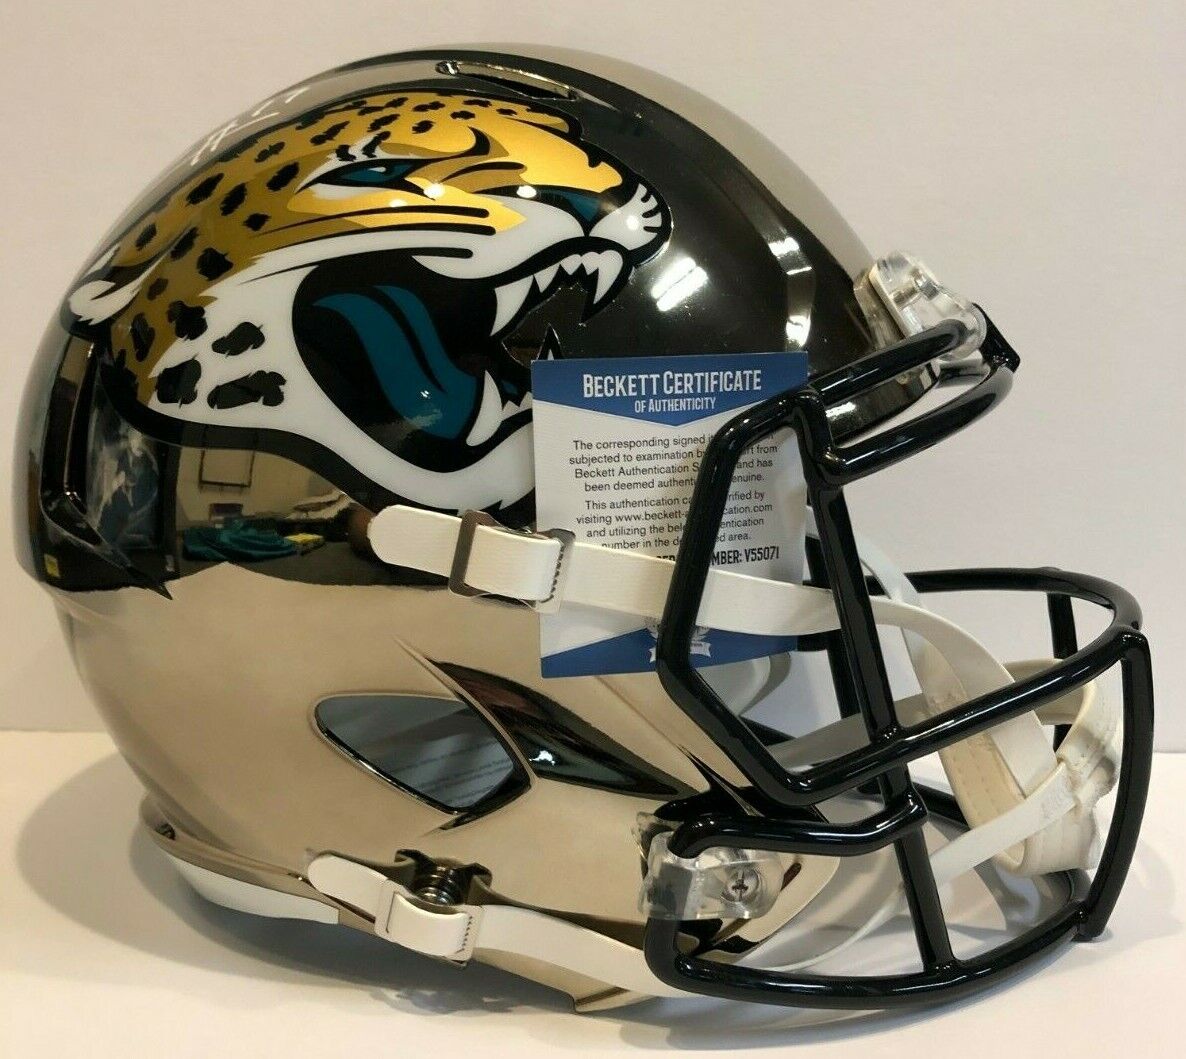 jaguars original helmet